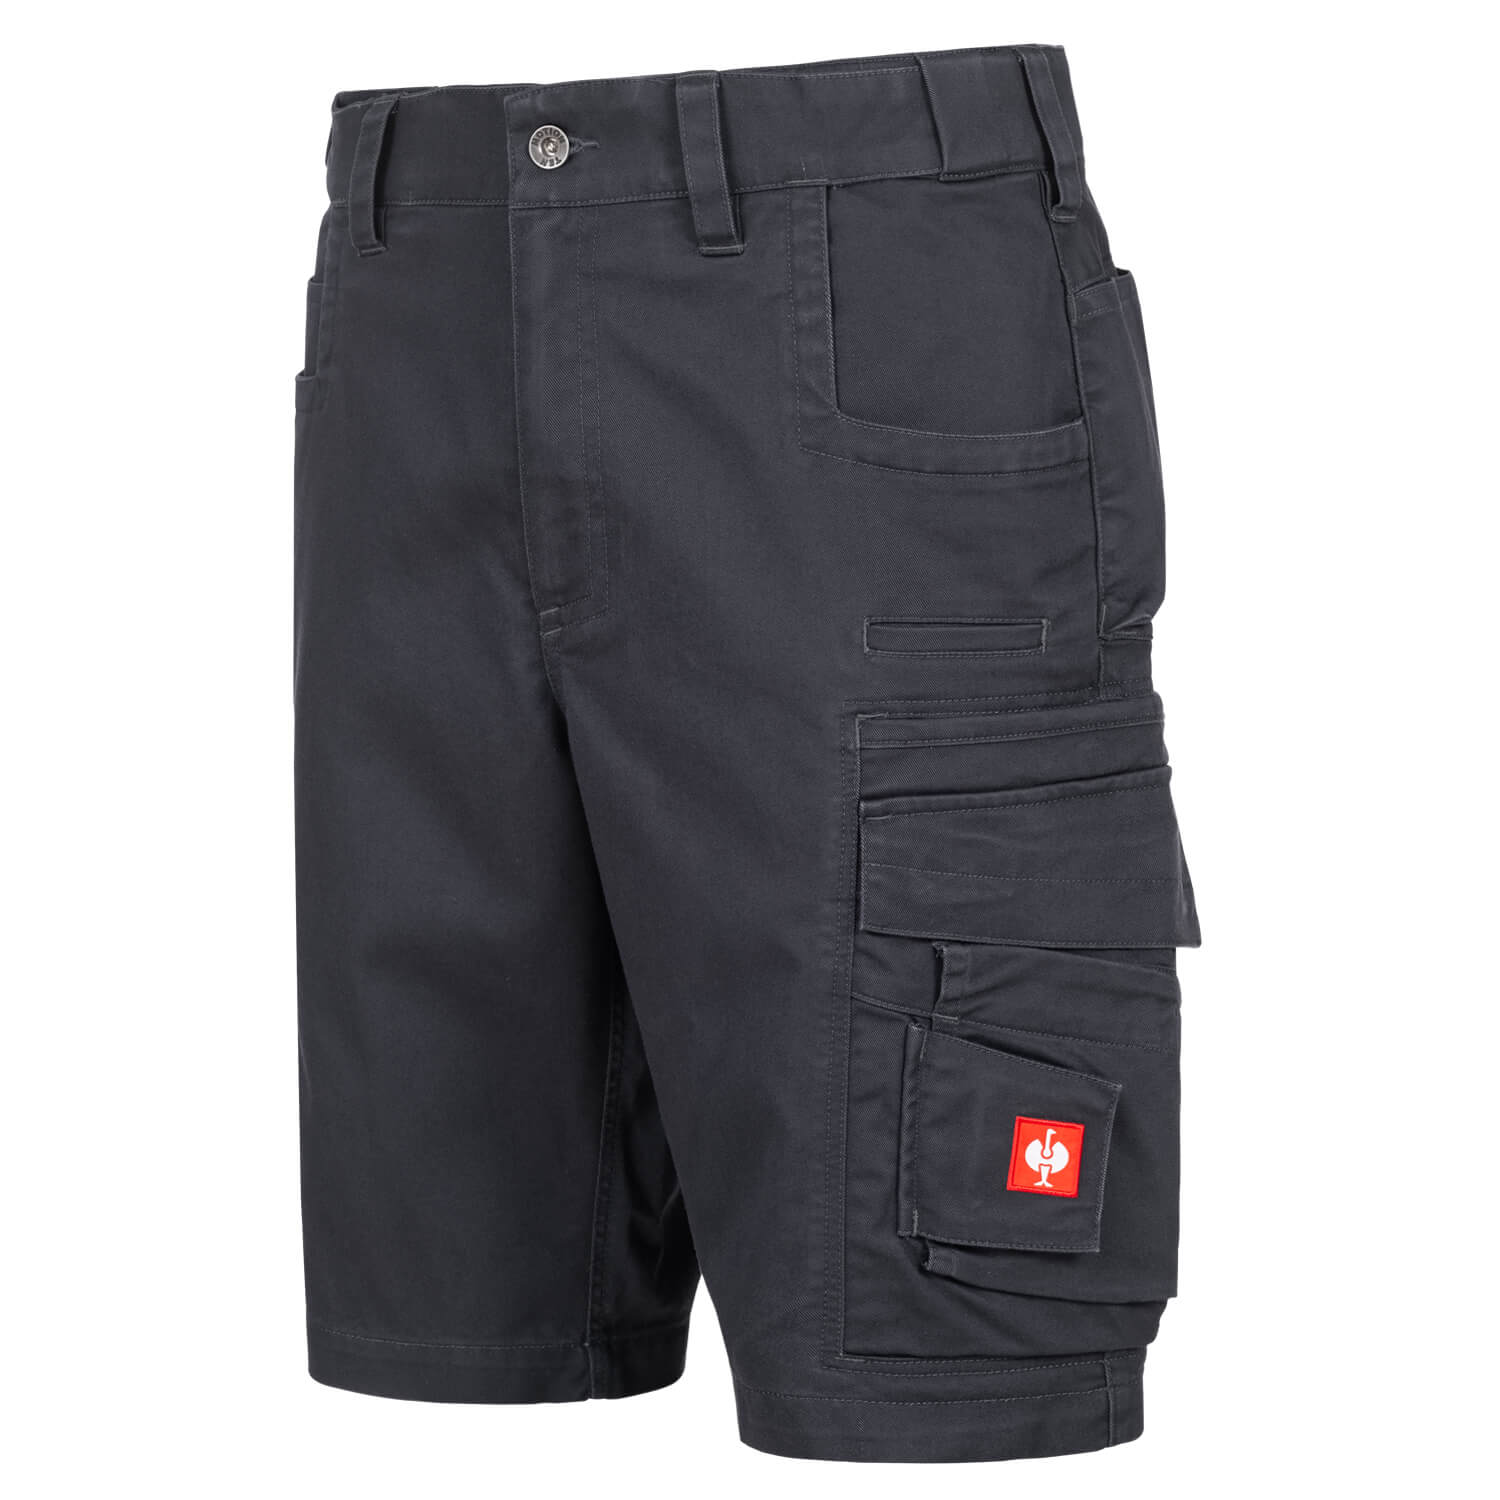 Bild 3: Workwear Pants Short Anthracite